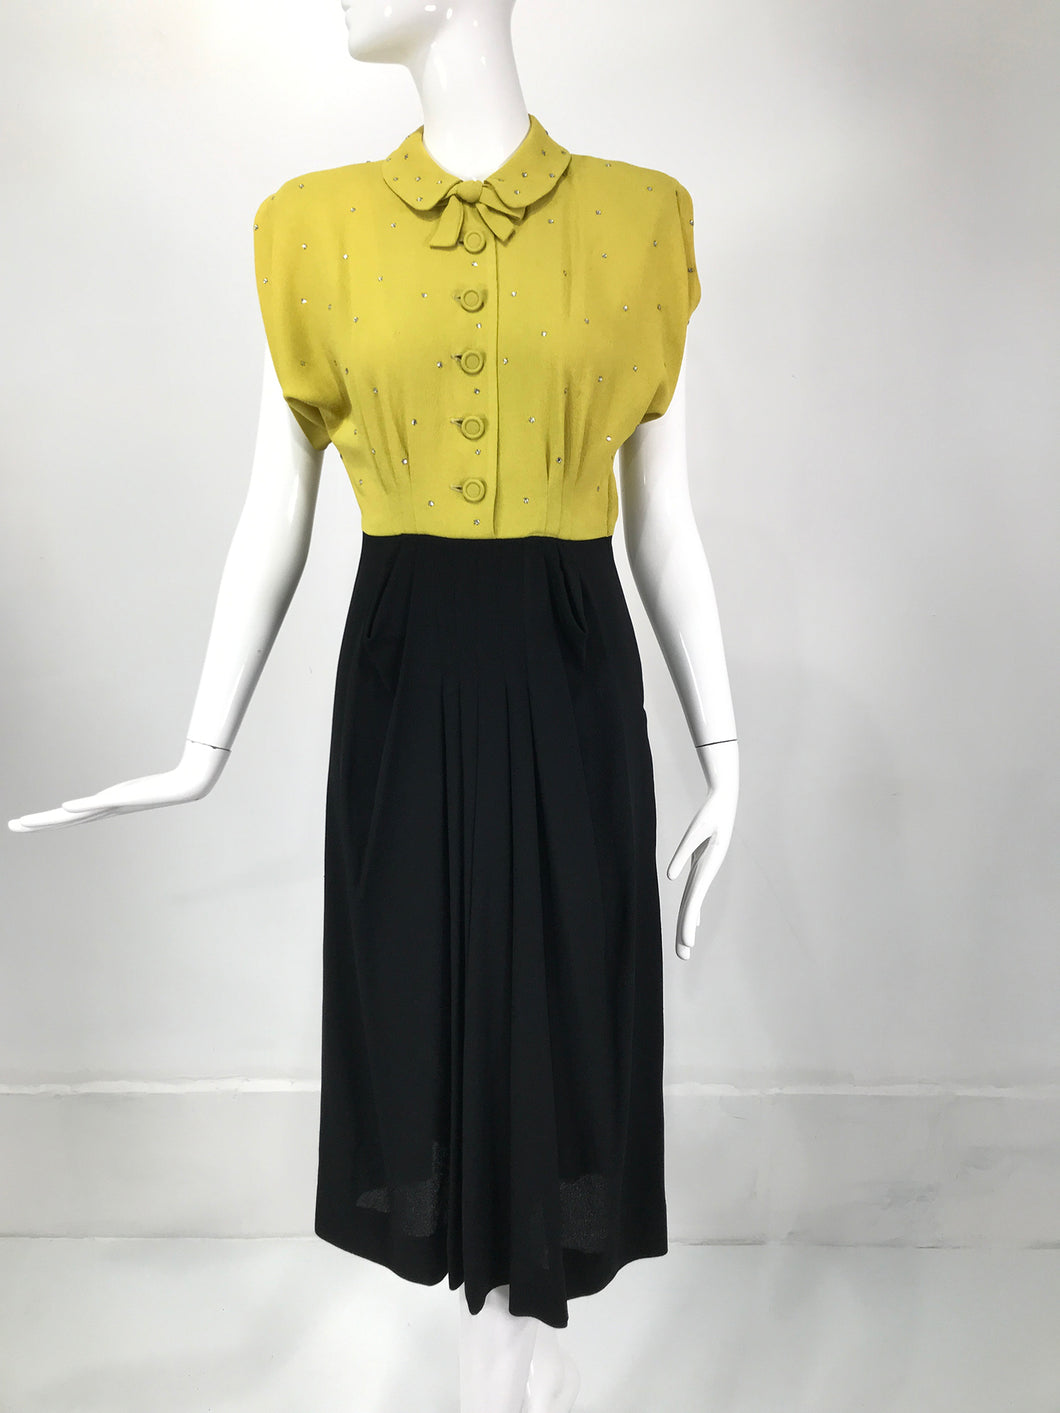 Original Paramount Junior Chicago 1940s Chartreuse & Black Crepe Dress